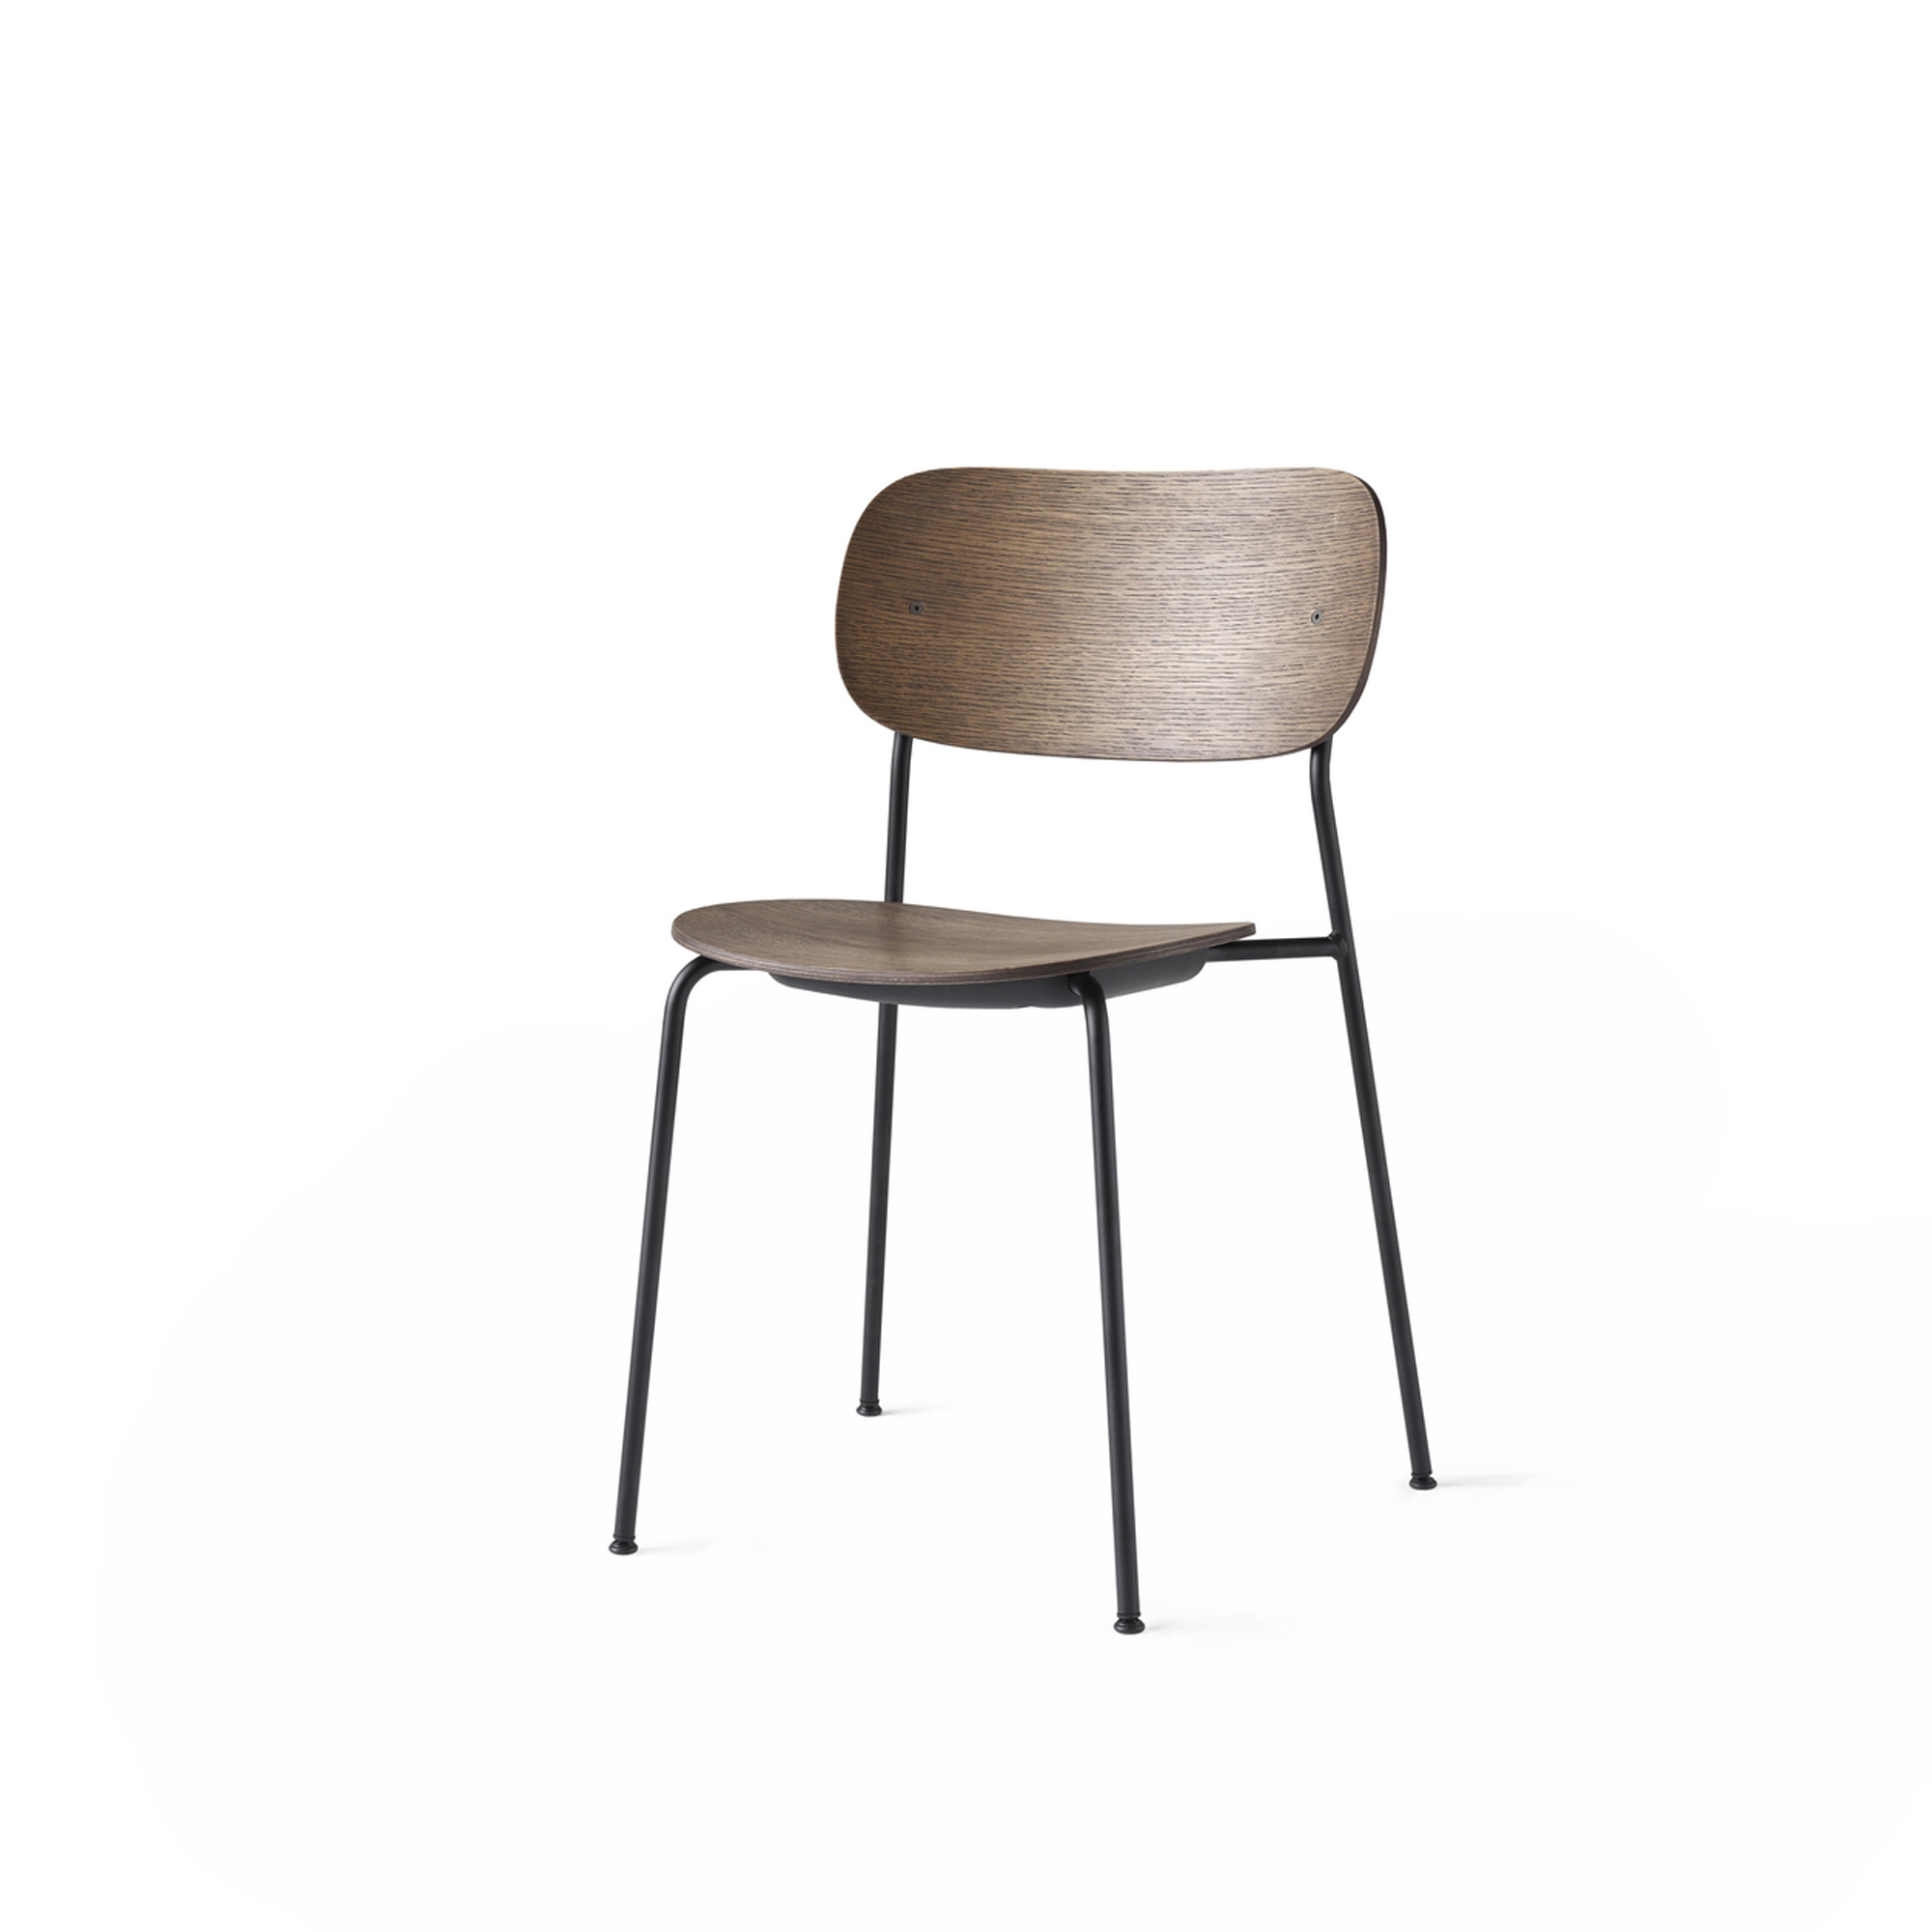 Co Chair brunproduktzoombild #1